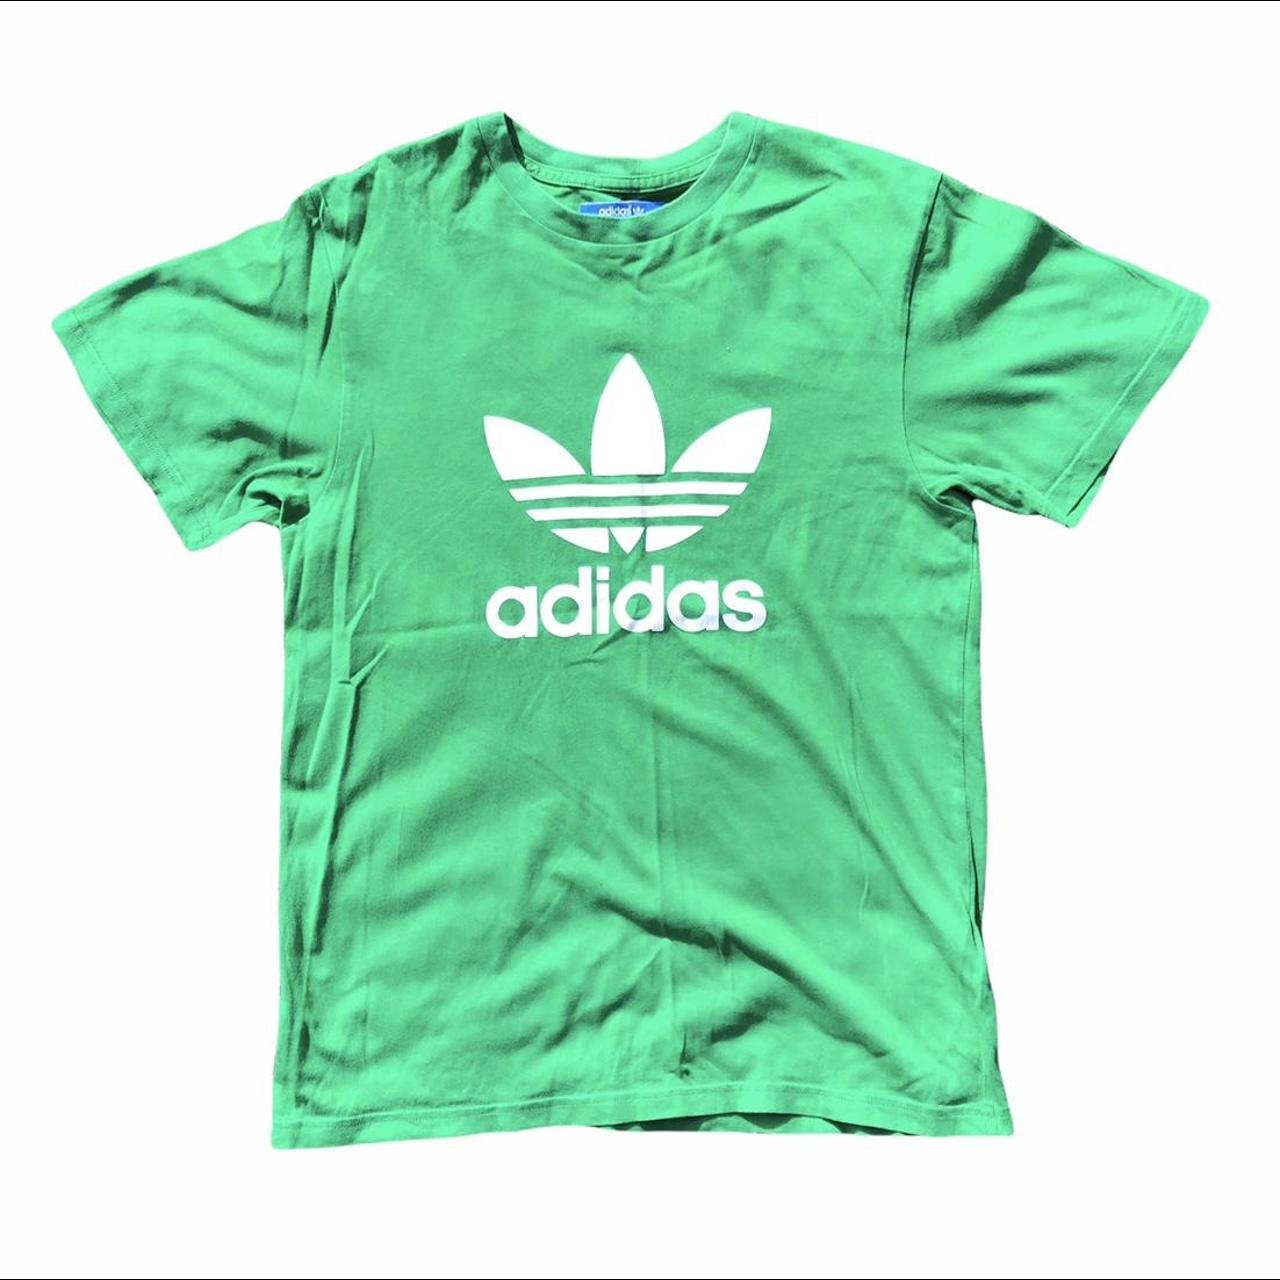 Adidas Men's Green and White T-shirt | Depop